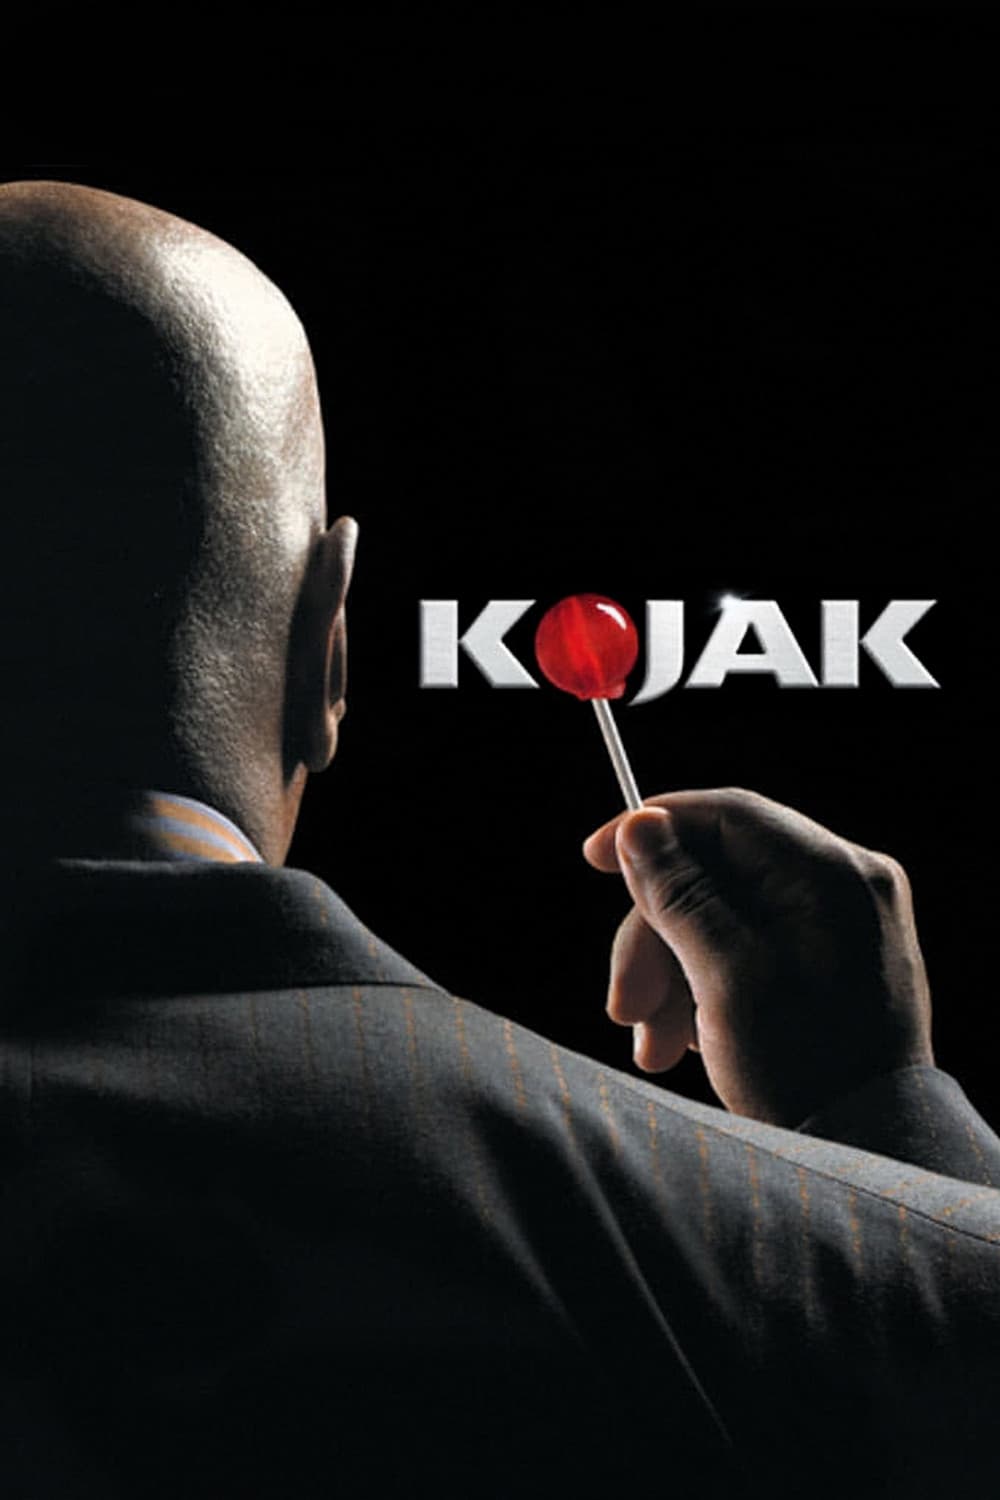 Kojak TV Shows About Police Procedural